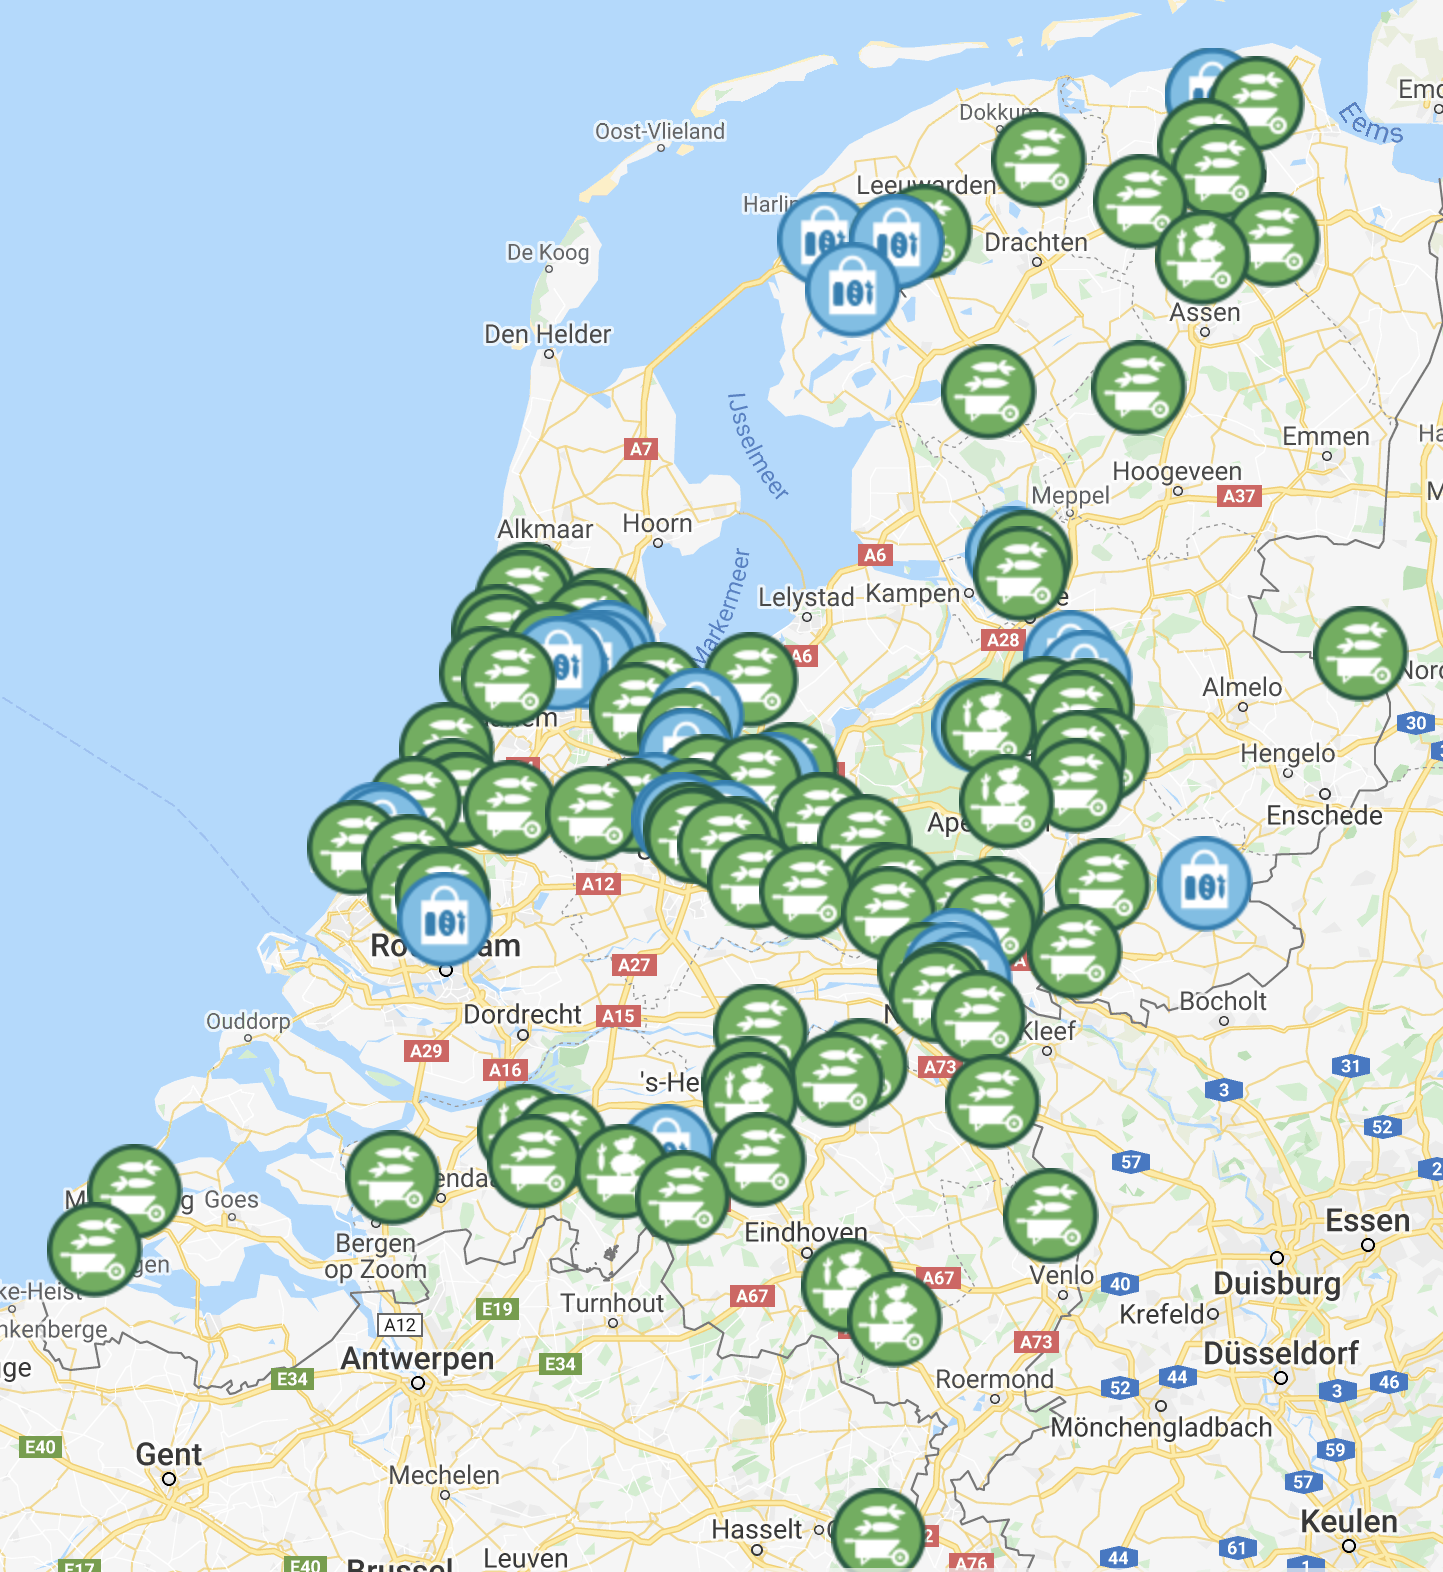 https://www.wijetenlokaal.nl/kaart/